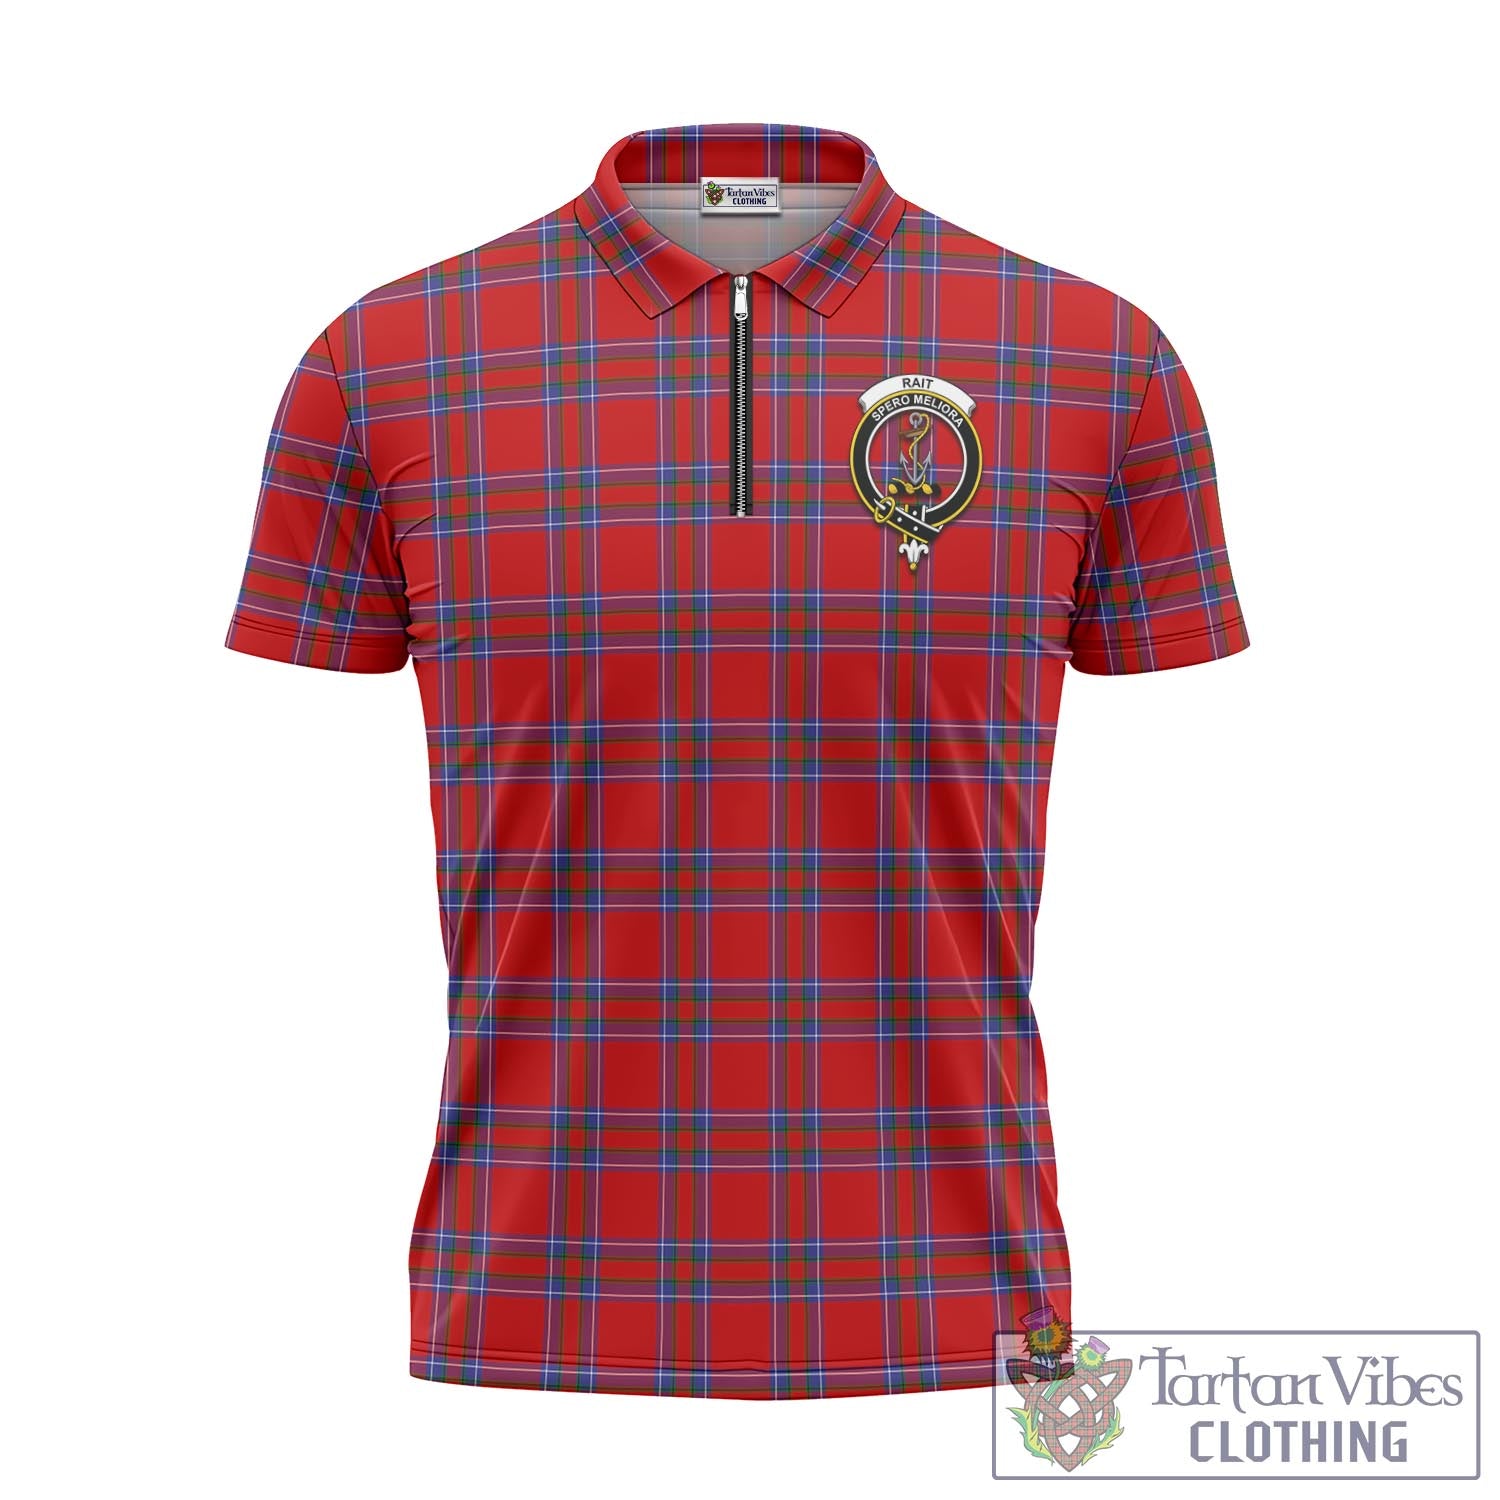 Tartan Vibes Clothing Rait Tartan Zipper Polo Shirt with Family Crest